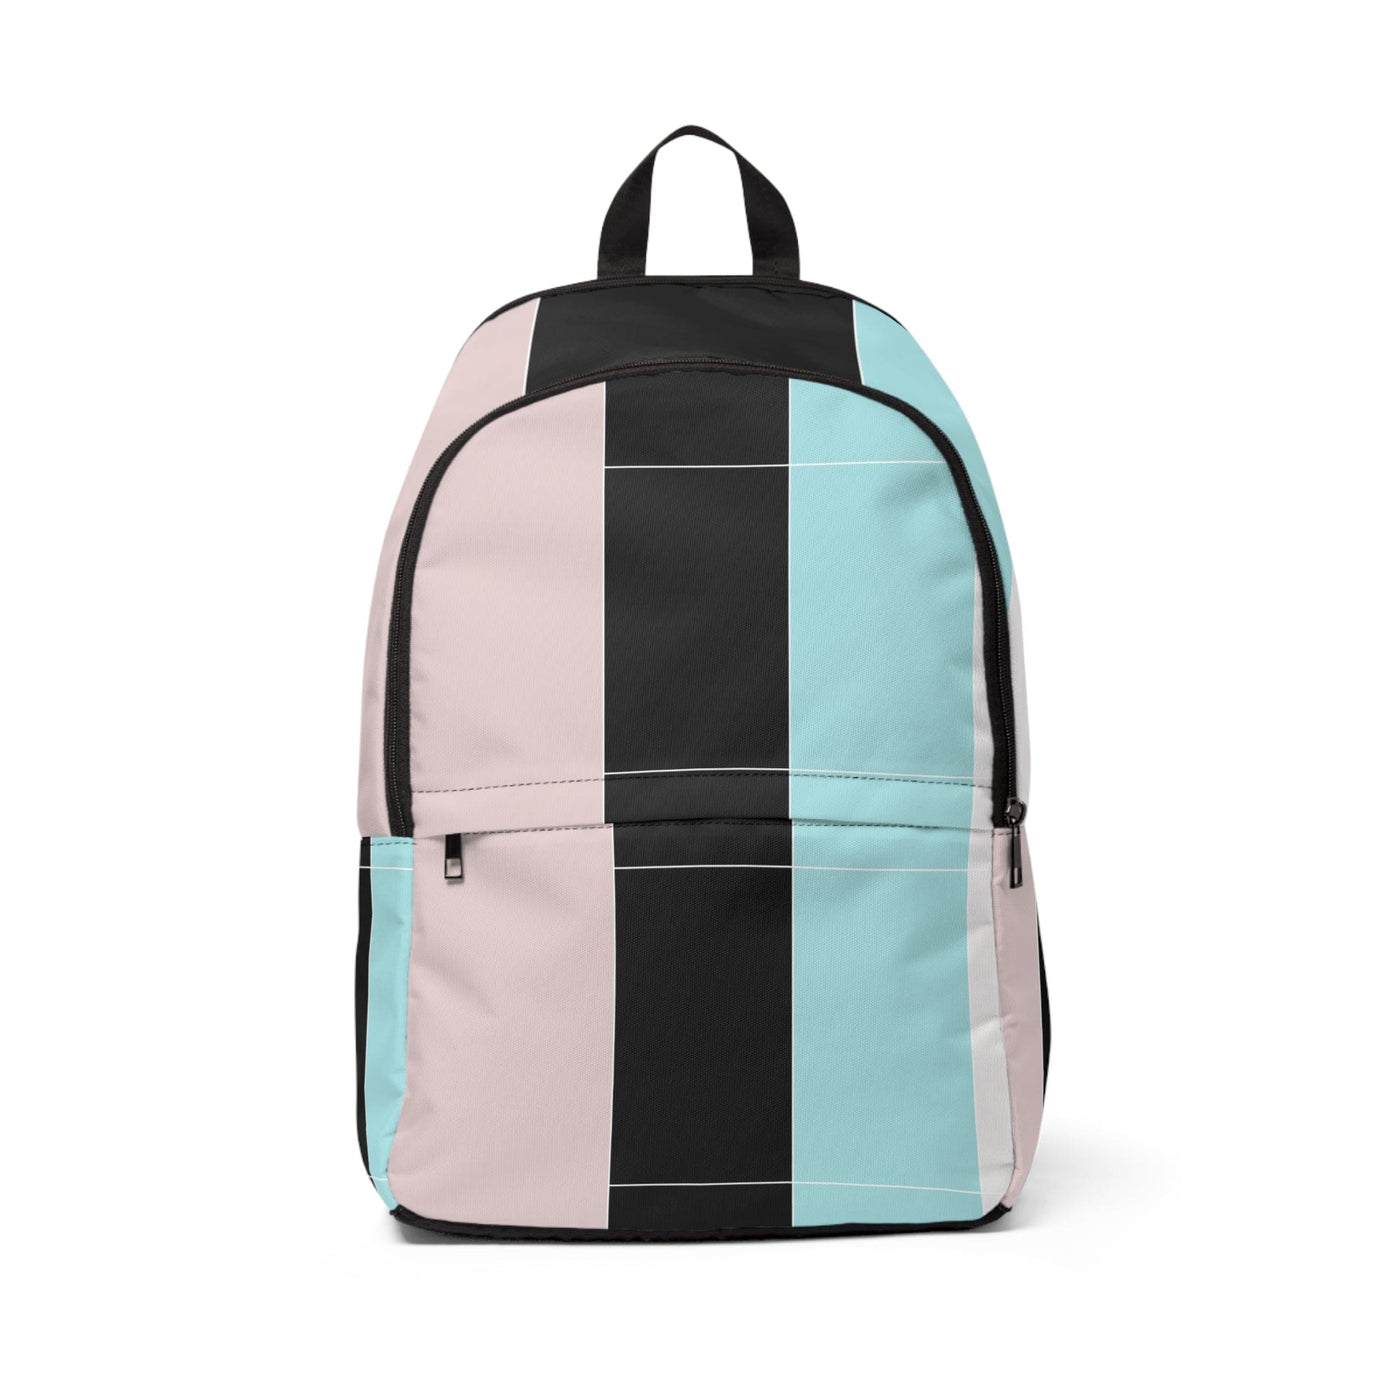 Fashion Backpack Waterproof Pastel Colorblock Pink/black/blue - Bags